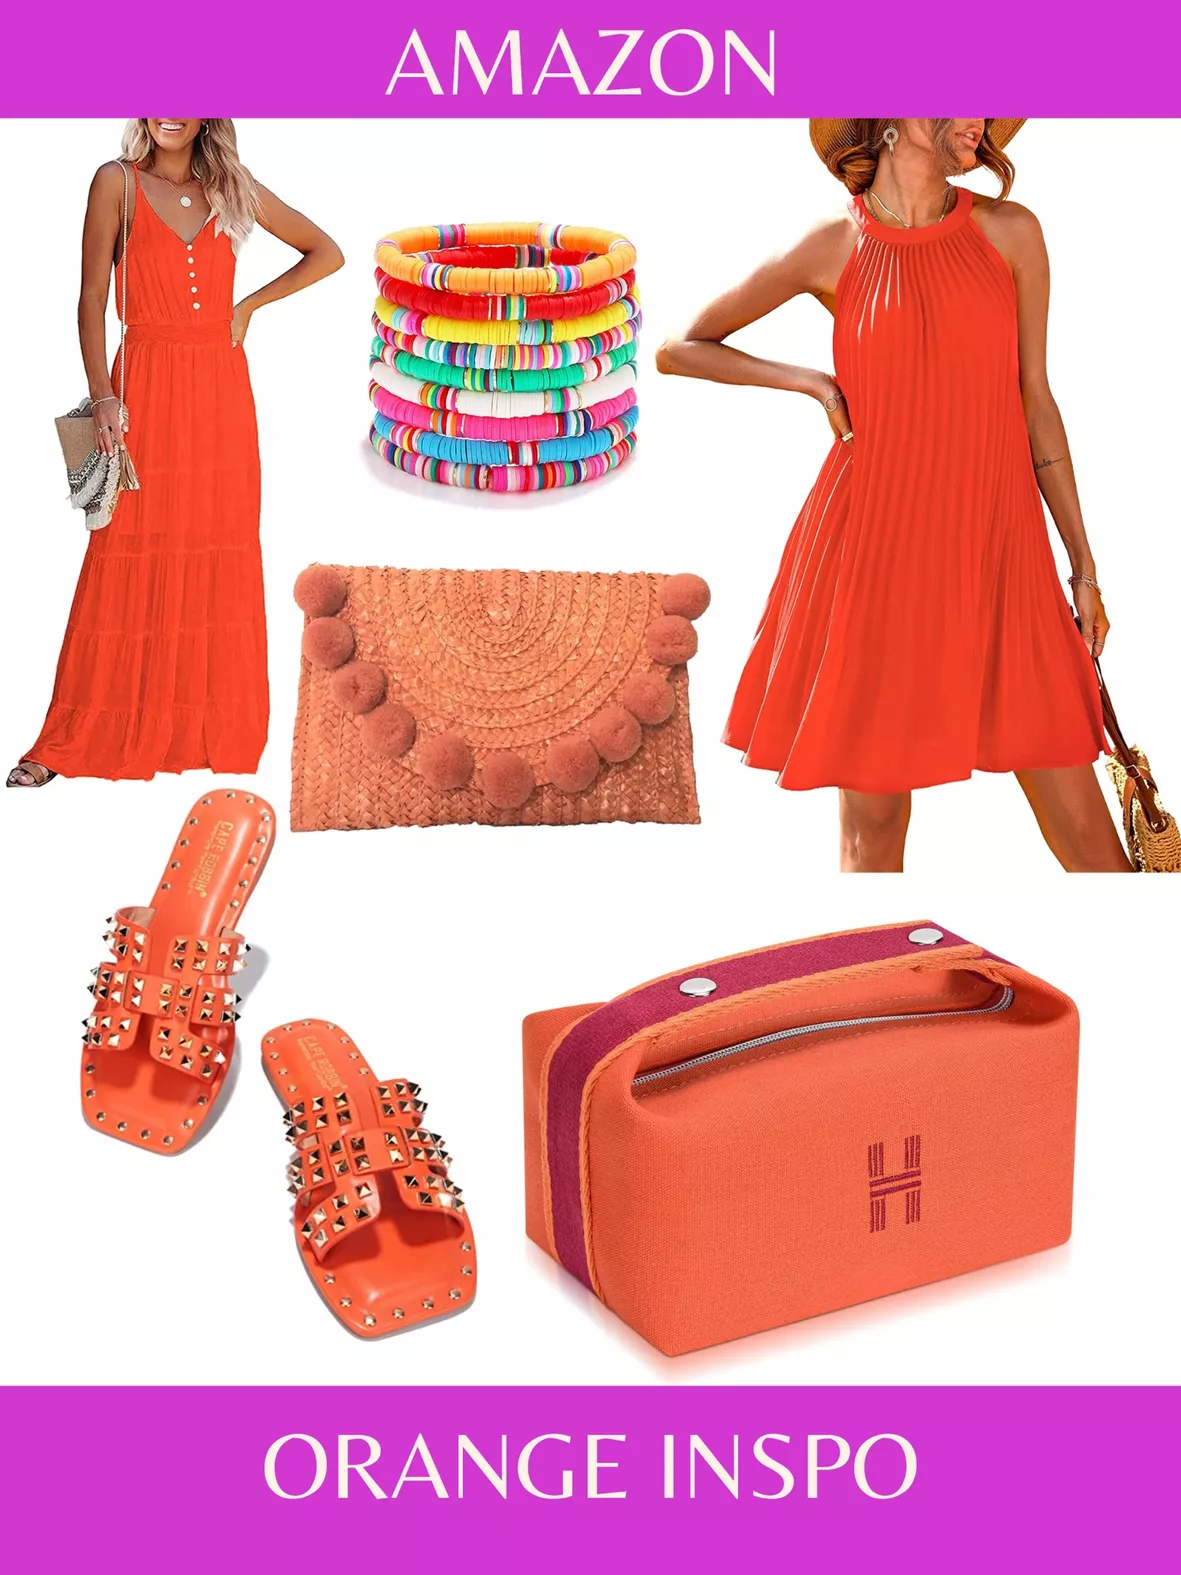  Sluxa Fashion Makeup Bag for Women, Orange Red Canvas